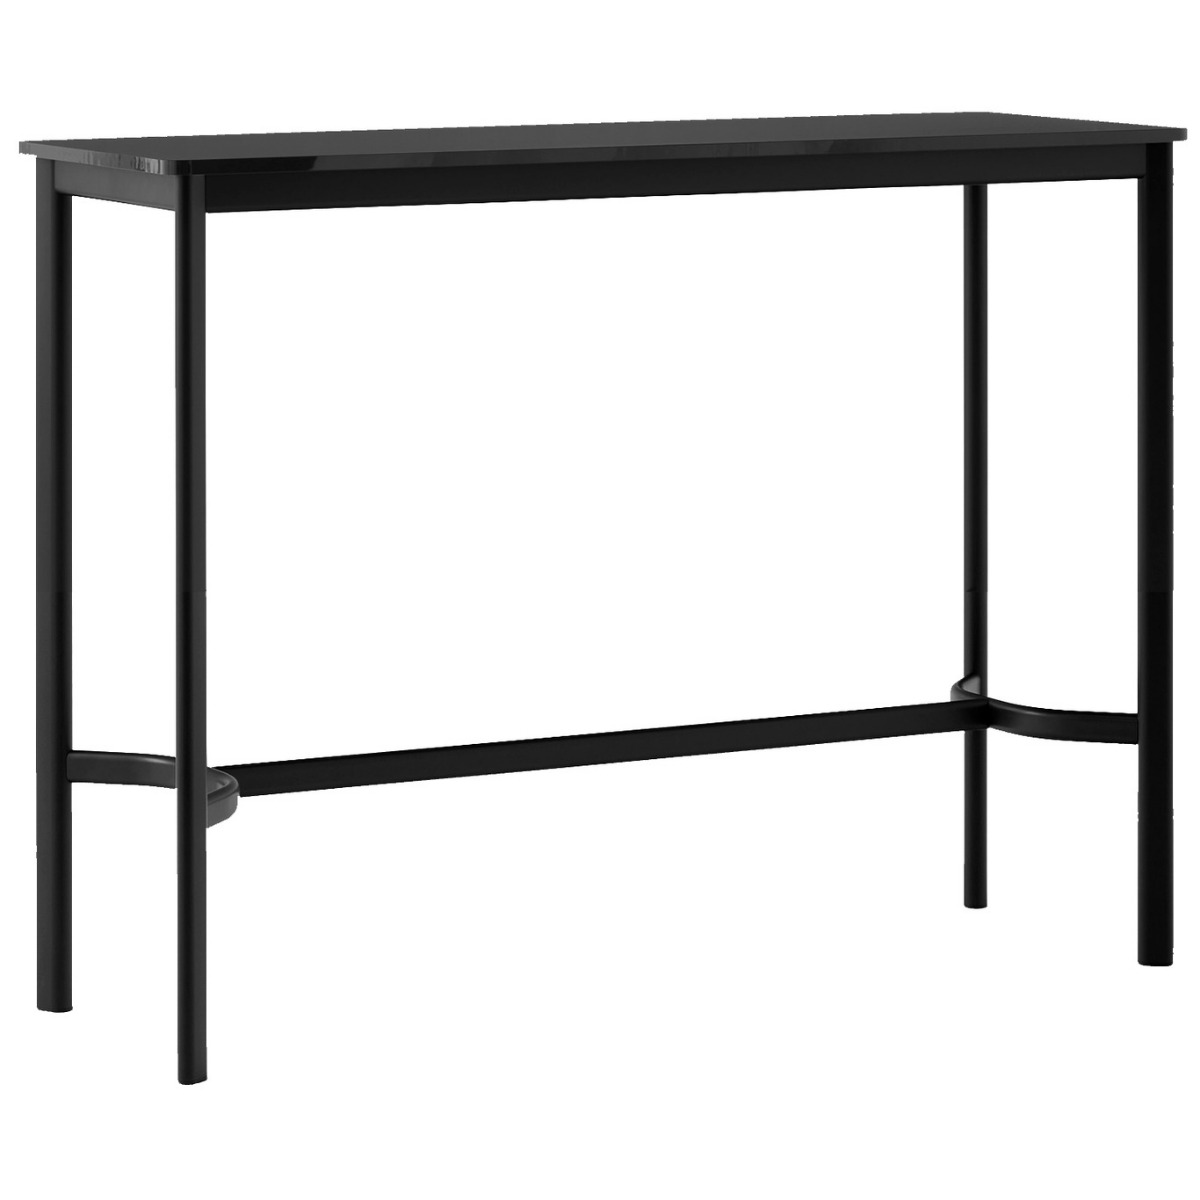 https://www.fundesign.nl/media/catalog/product/t/r/tradition-drip-bar-table-hw113-140x50x105-black-nano-laminate-black-legs-1.jpg